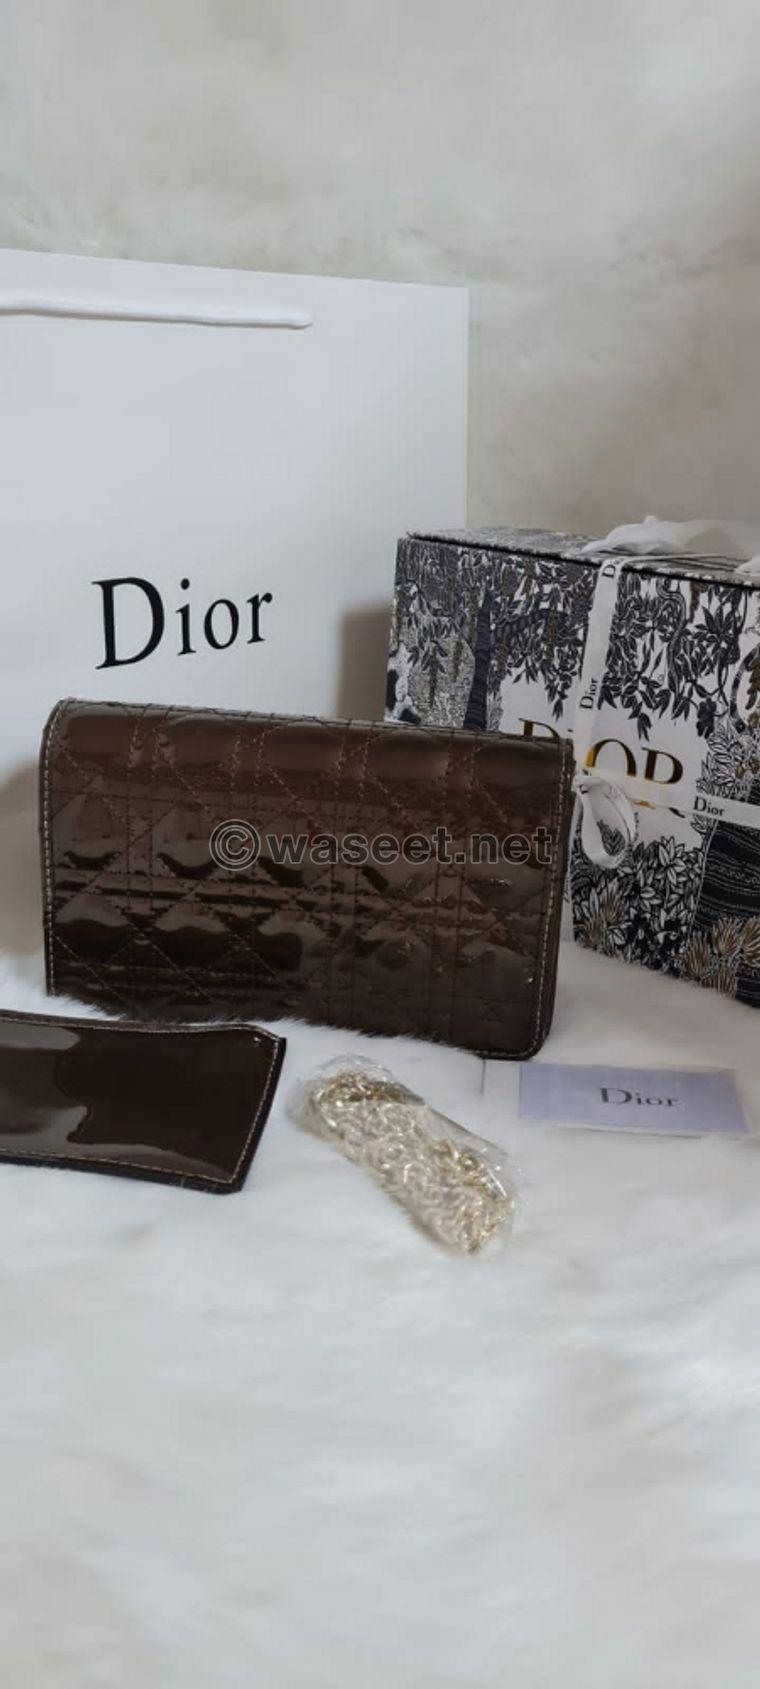 Dior bags 1